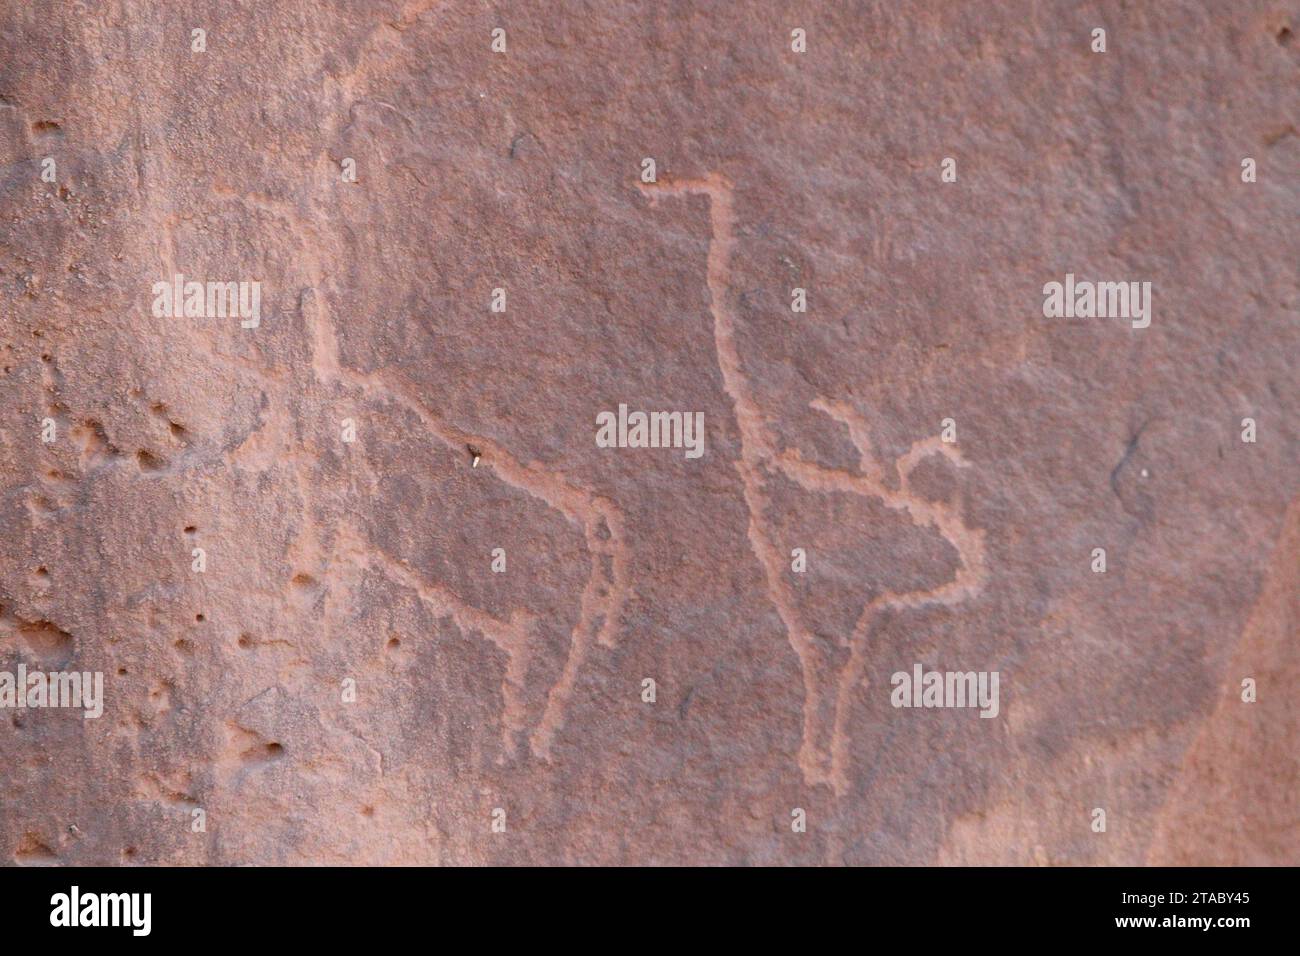 Petroglyphs (ancient rock carvings) in a desert area near Aswan, Egypt Stock Photo